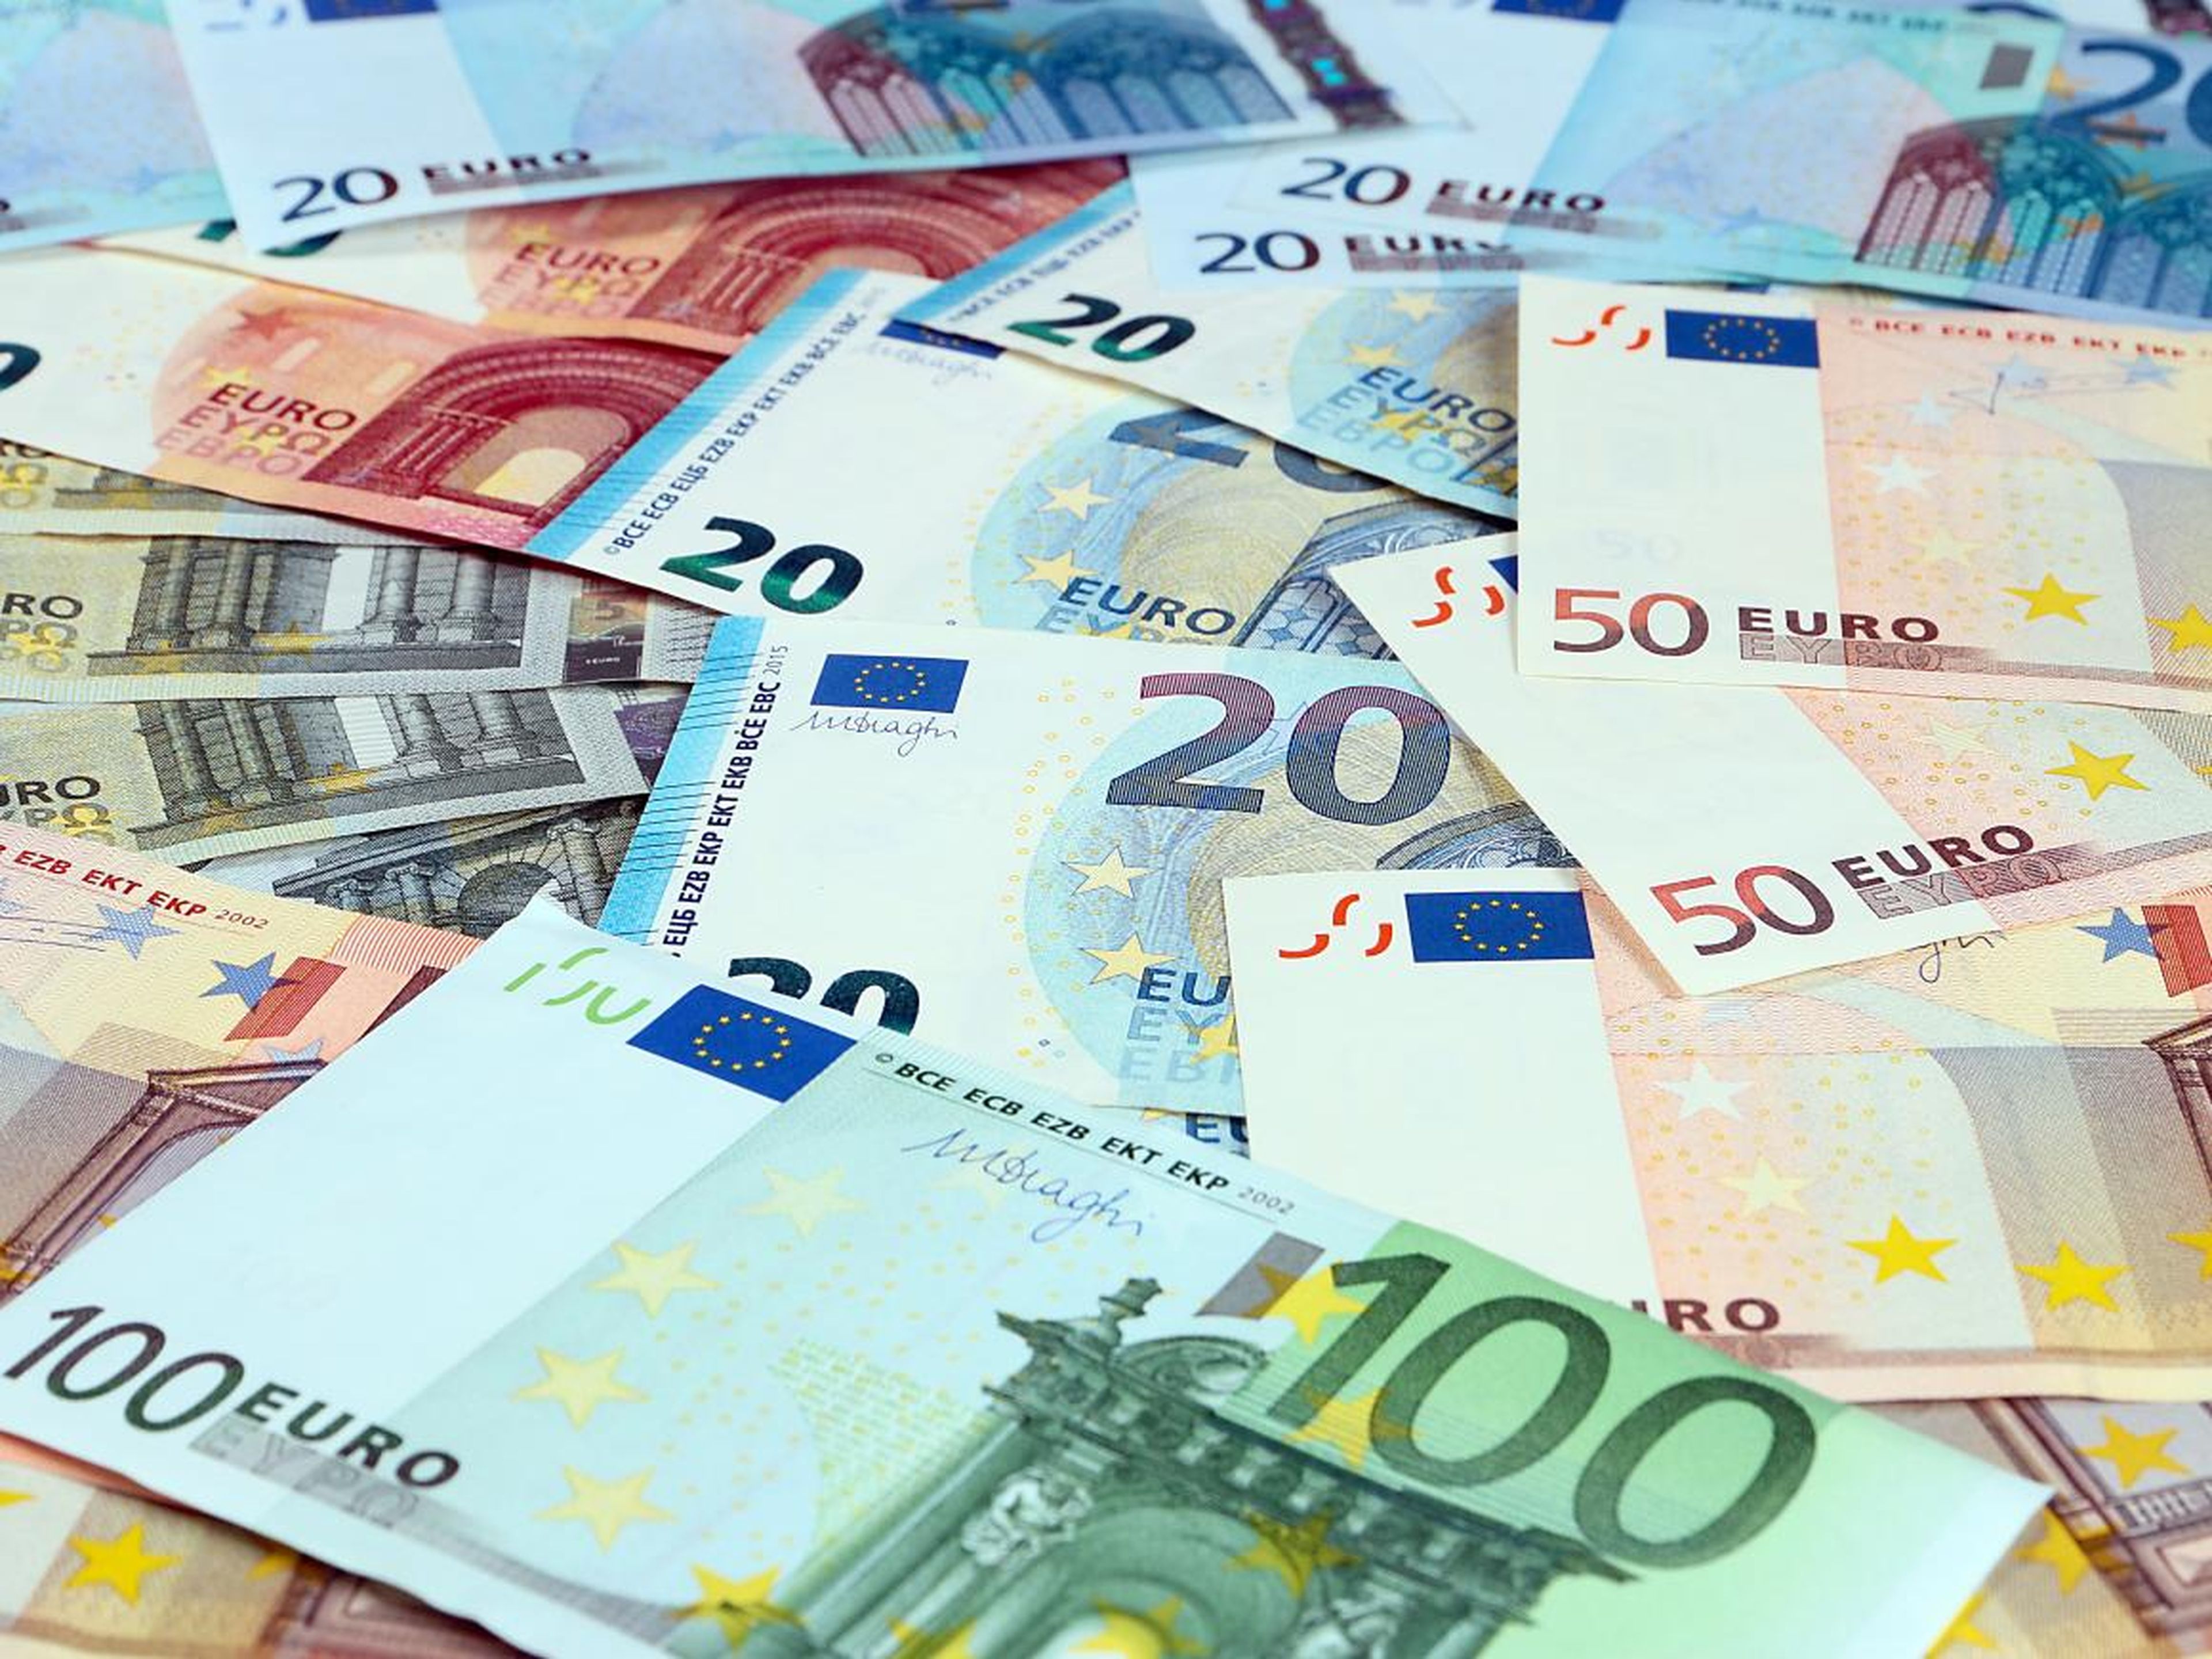 El Euro empezó a circular en 1999.